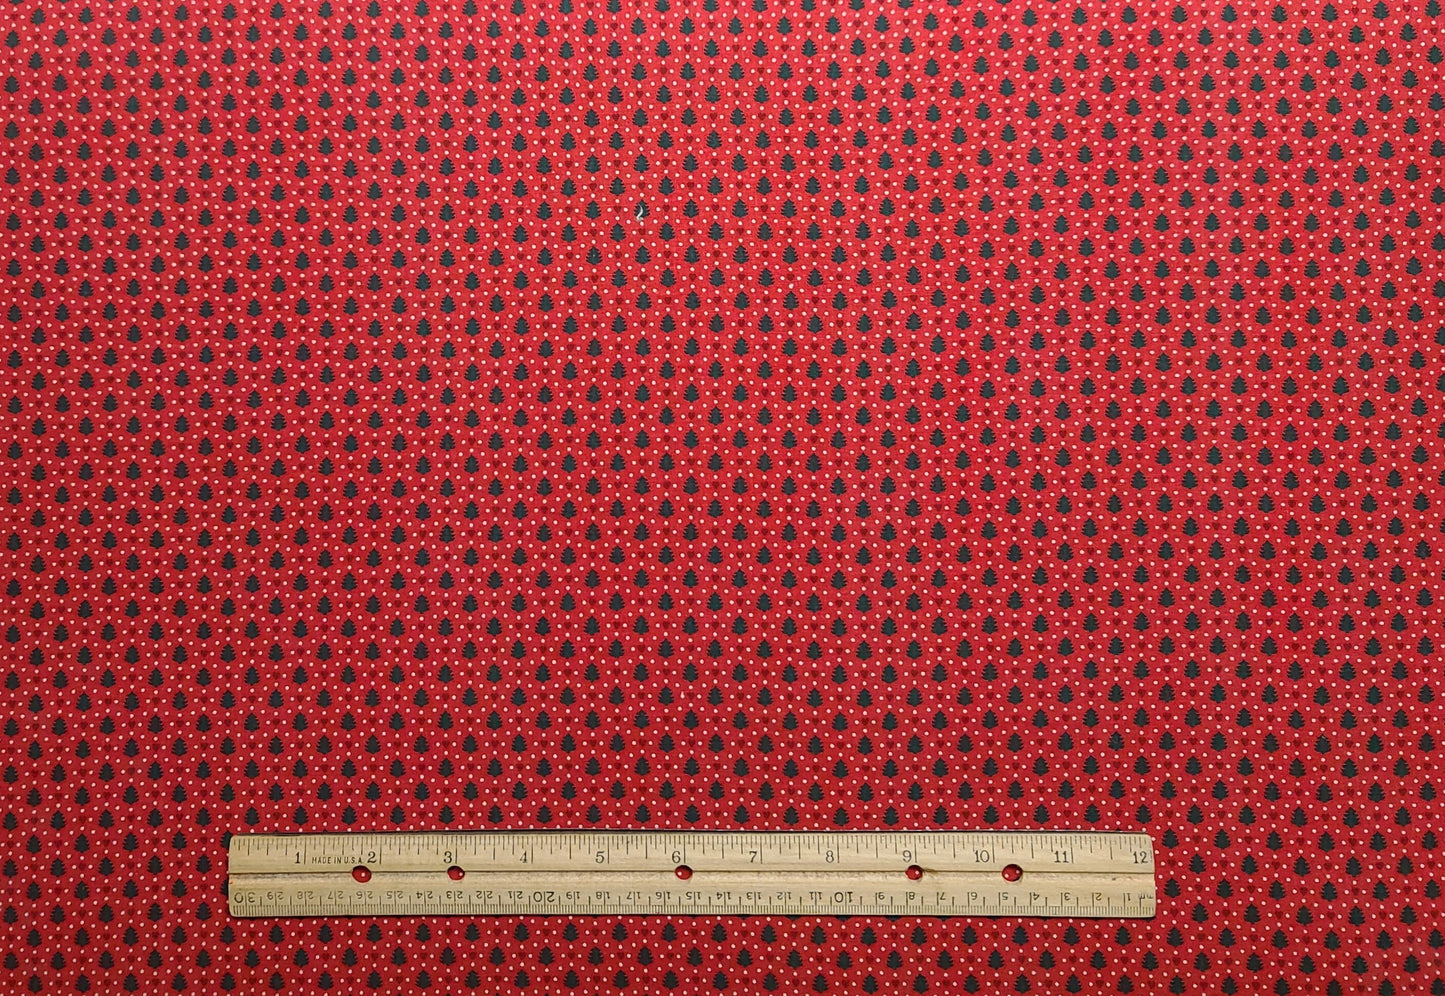 EOB - Oakhurst Textiles Inc - Red Fabric / Green Tree, Heart, Dot Print